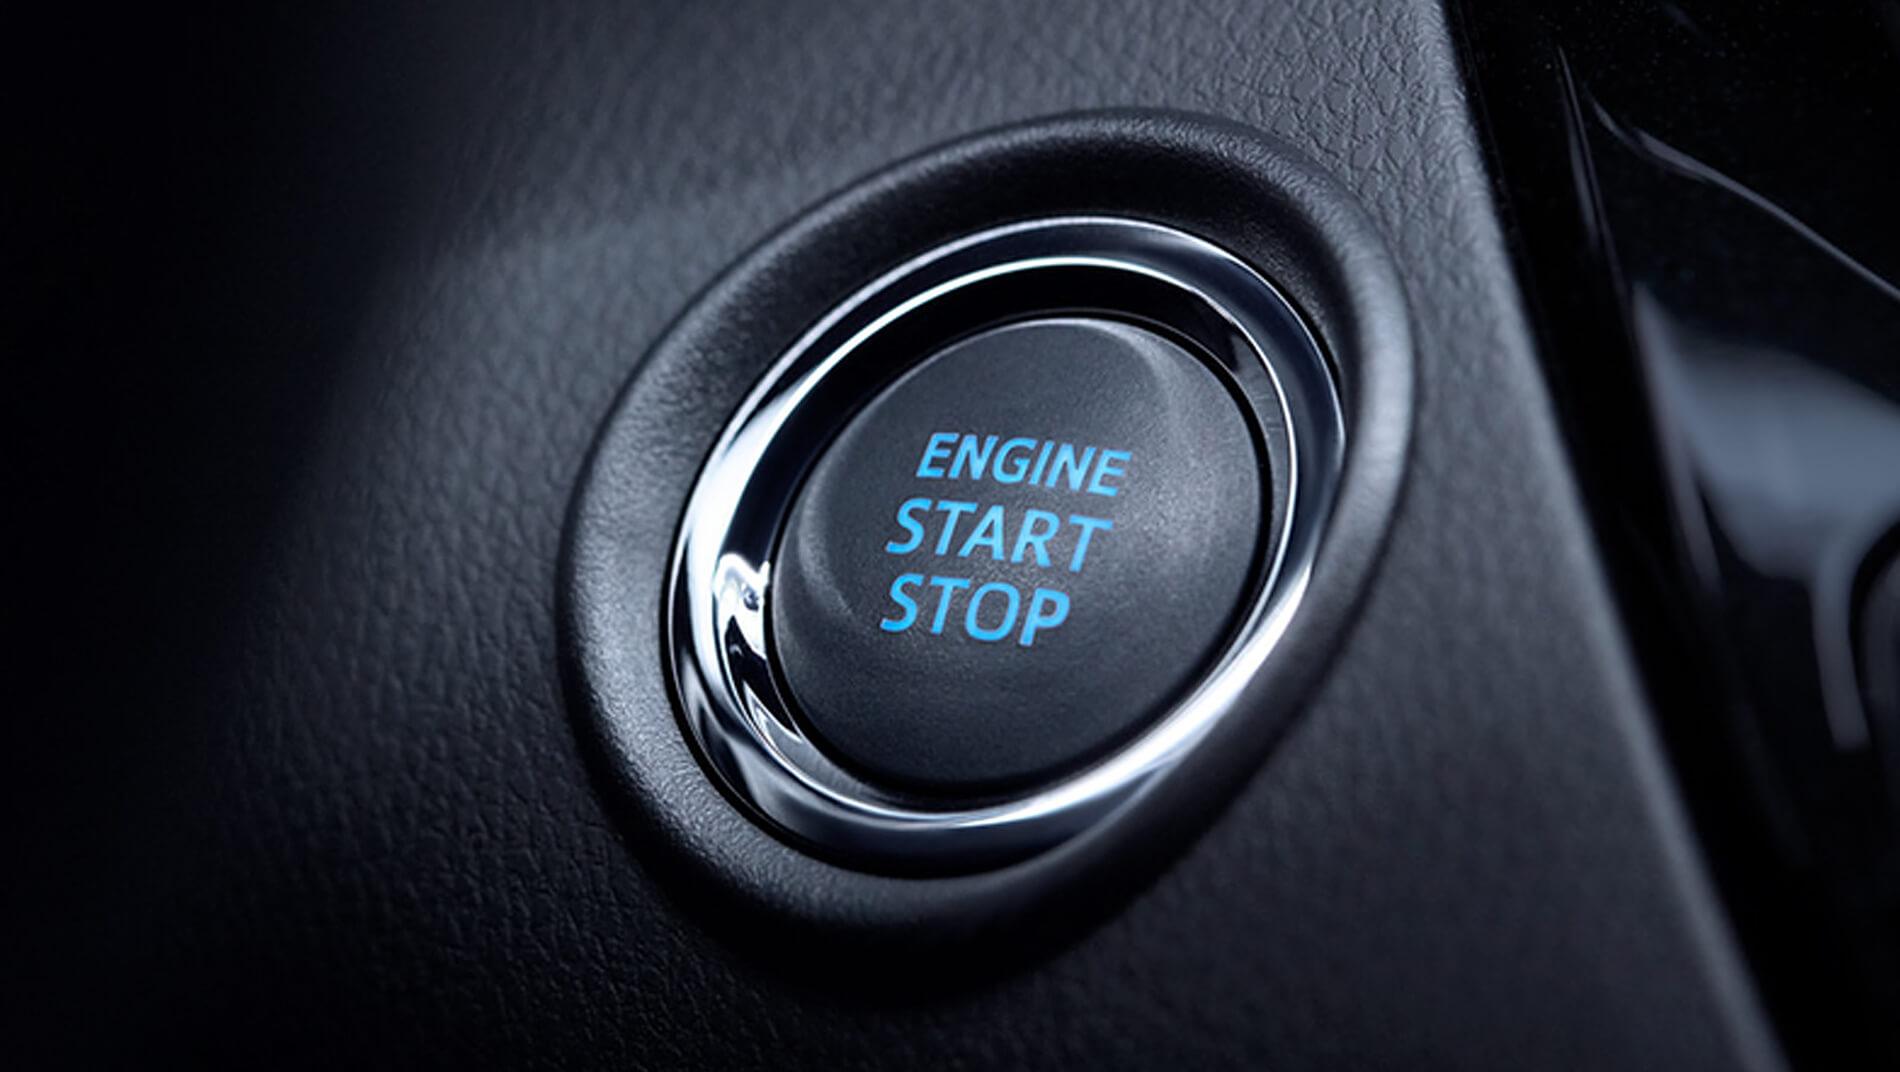 Toyota push to start button